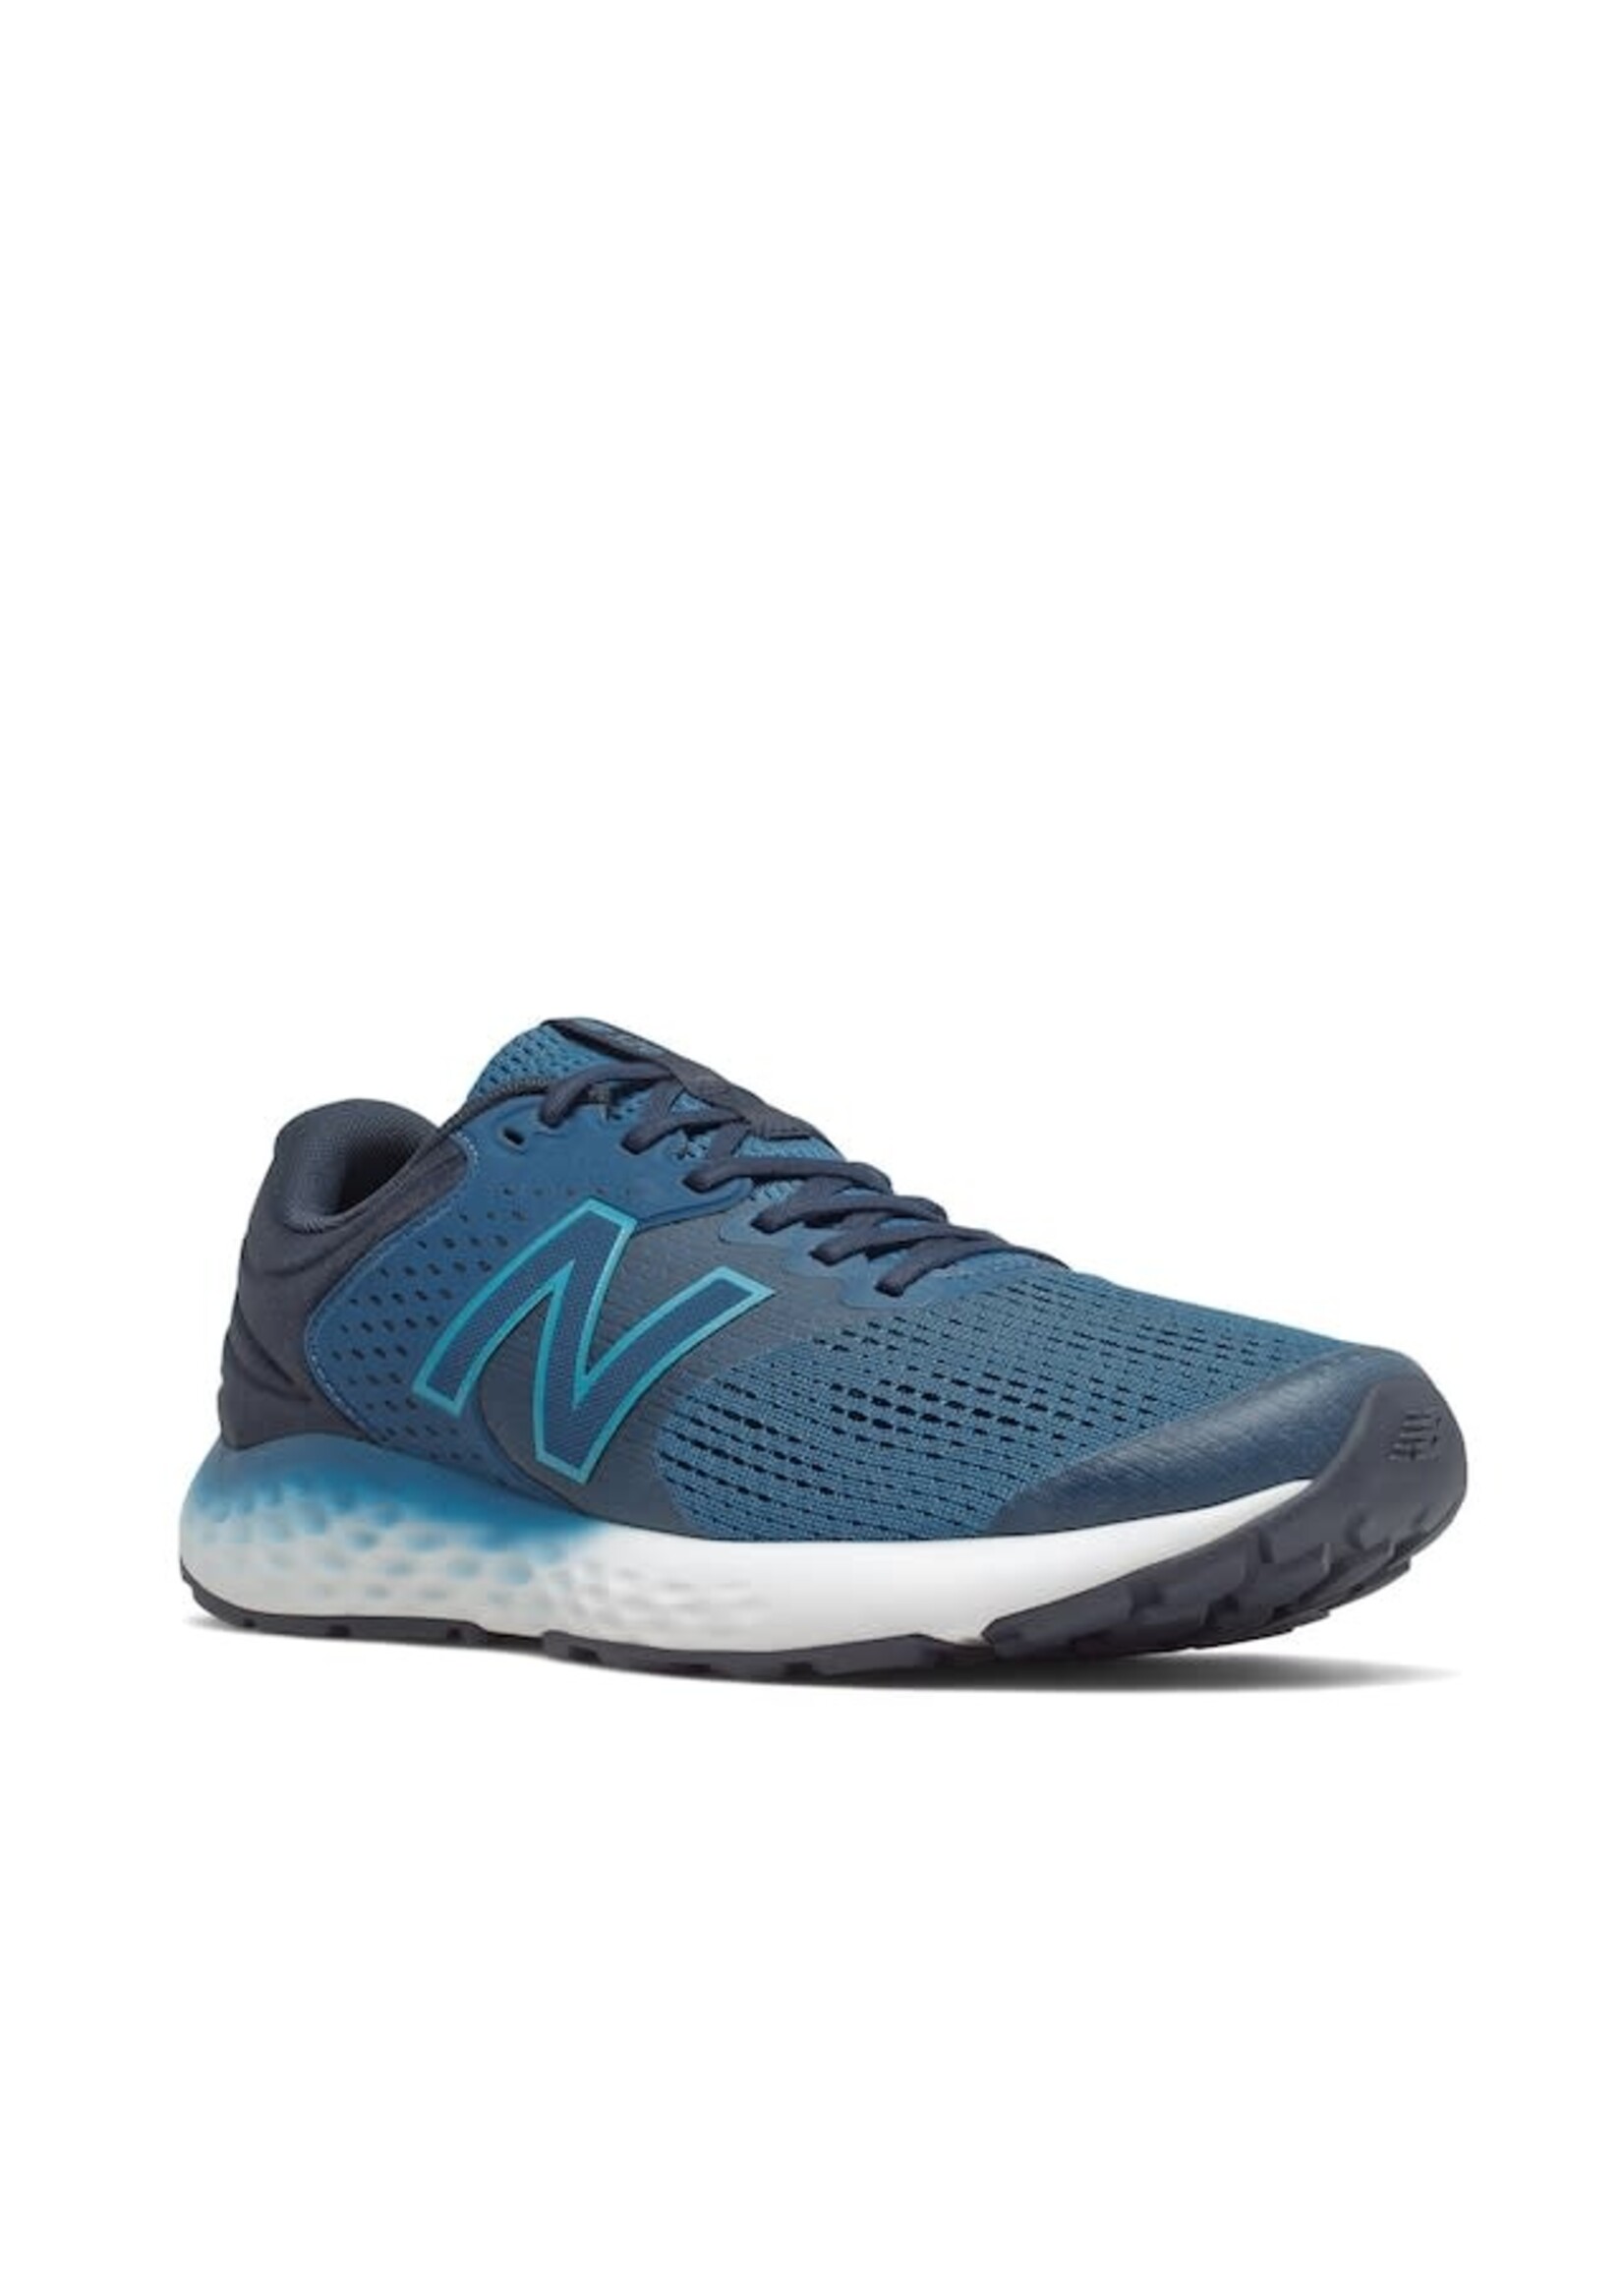 New Balance New Balance 520 v7 Mens Running Shoe, Navy Blue